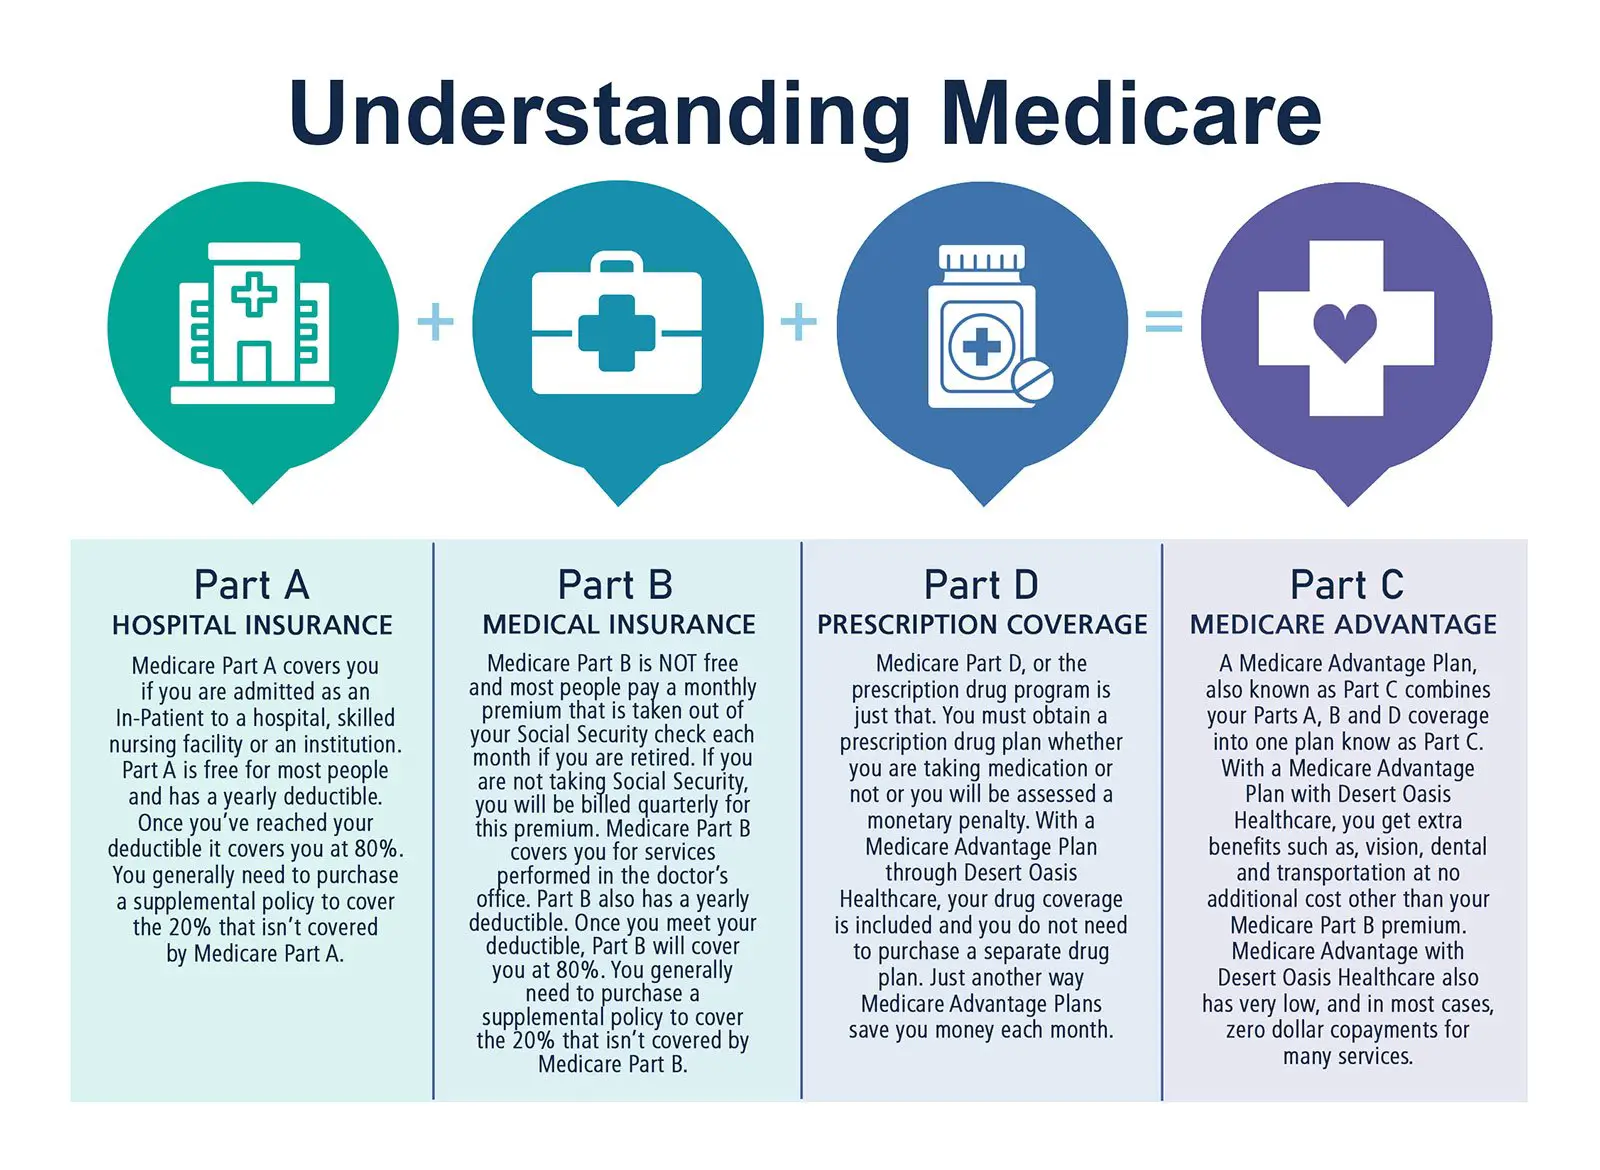 Understand Medicare